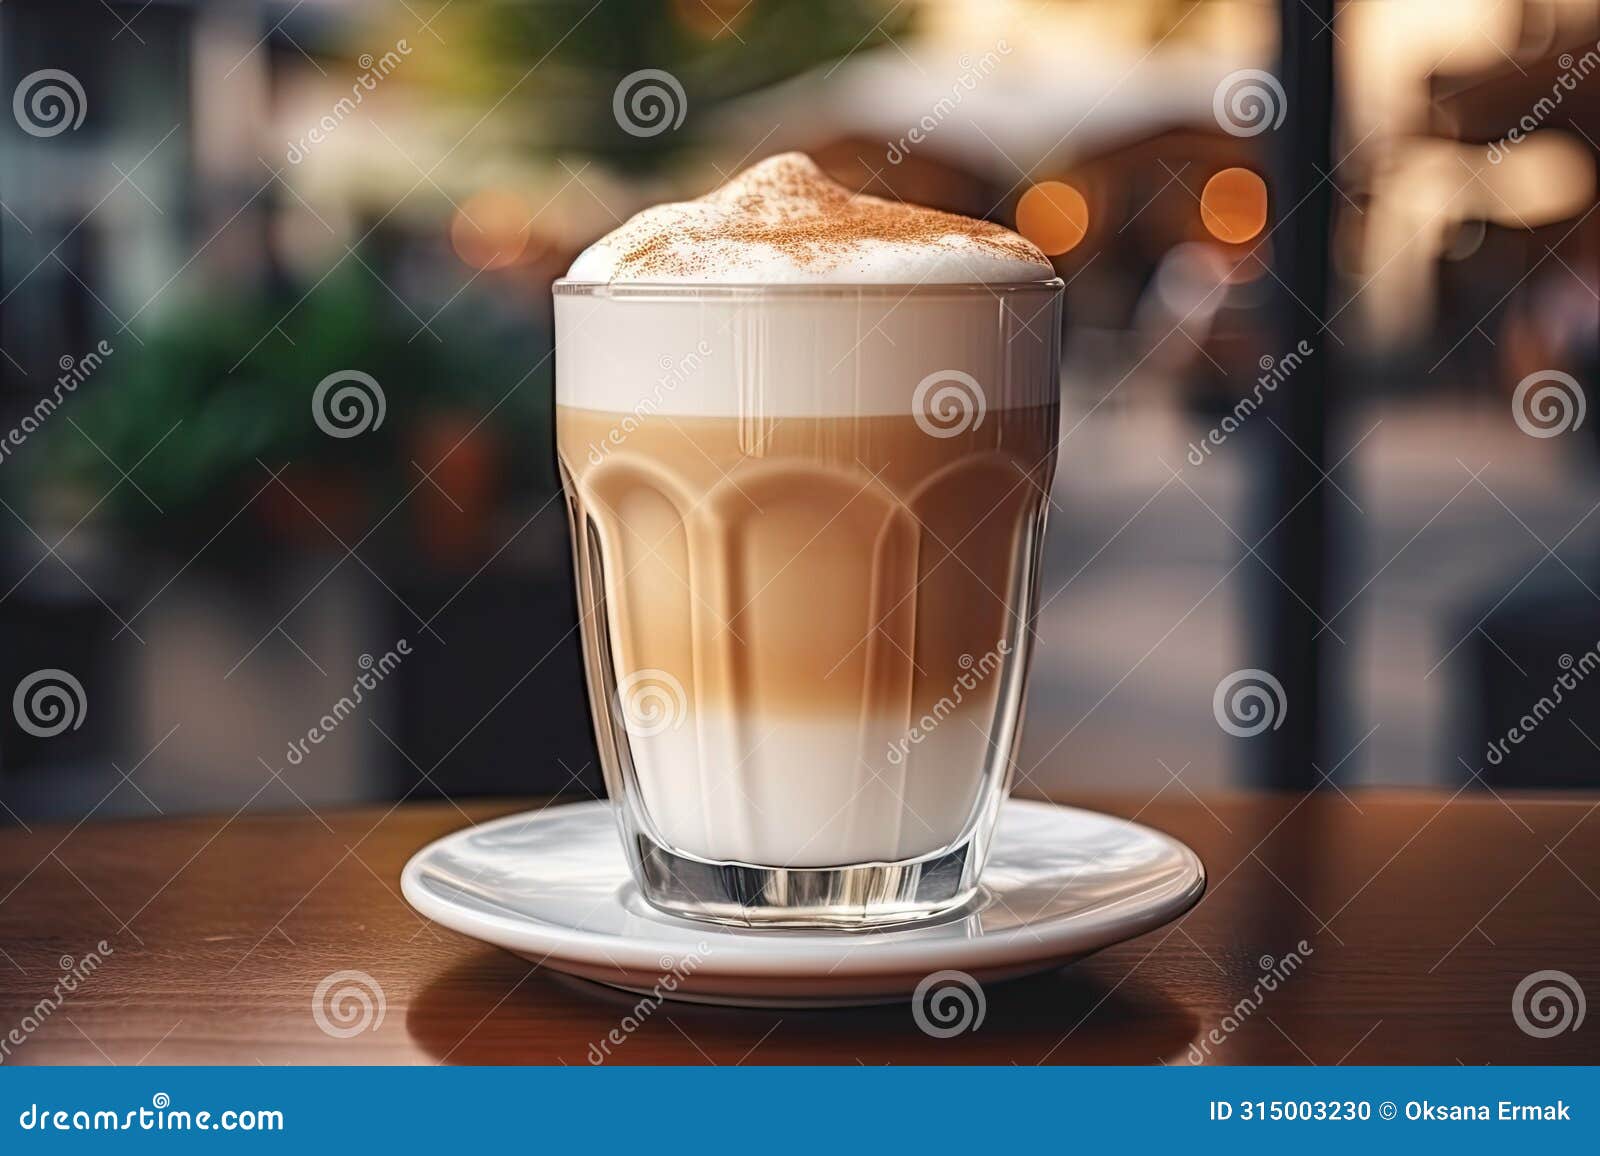 fresh latte espuma in outdoor cafe, cappuccino in coffeeshop city street view, milk coffee